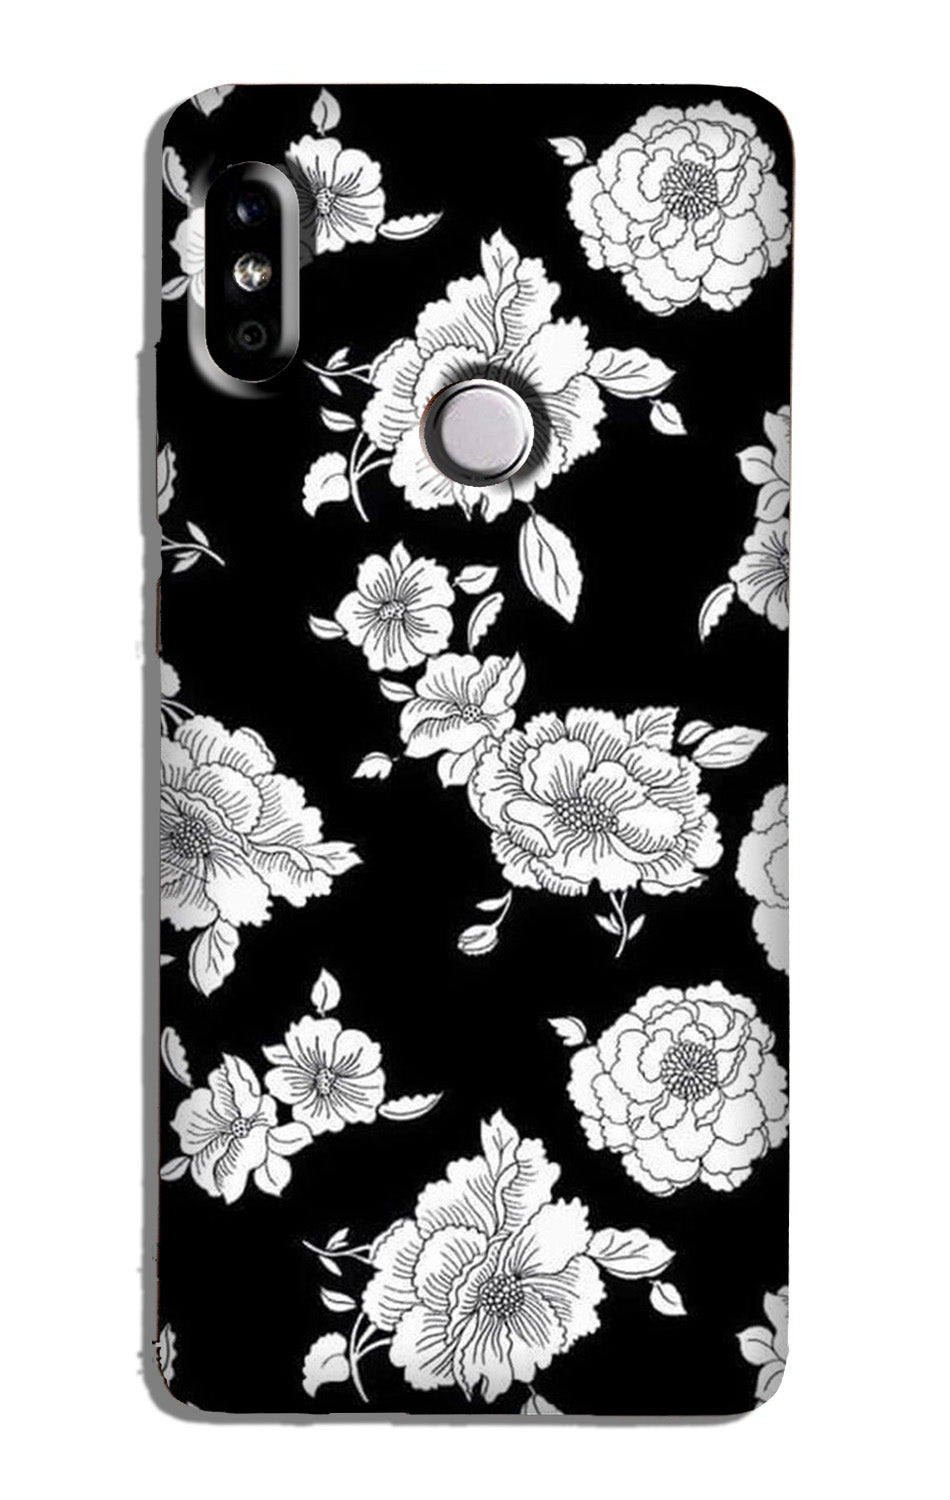 White flowers Black Background Case for Redmi Y2